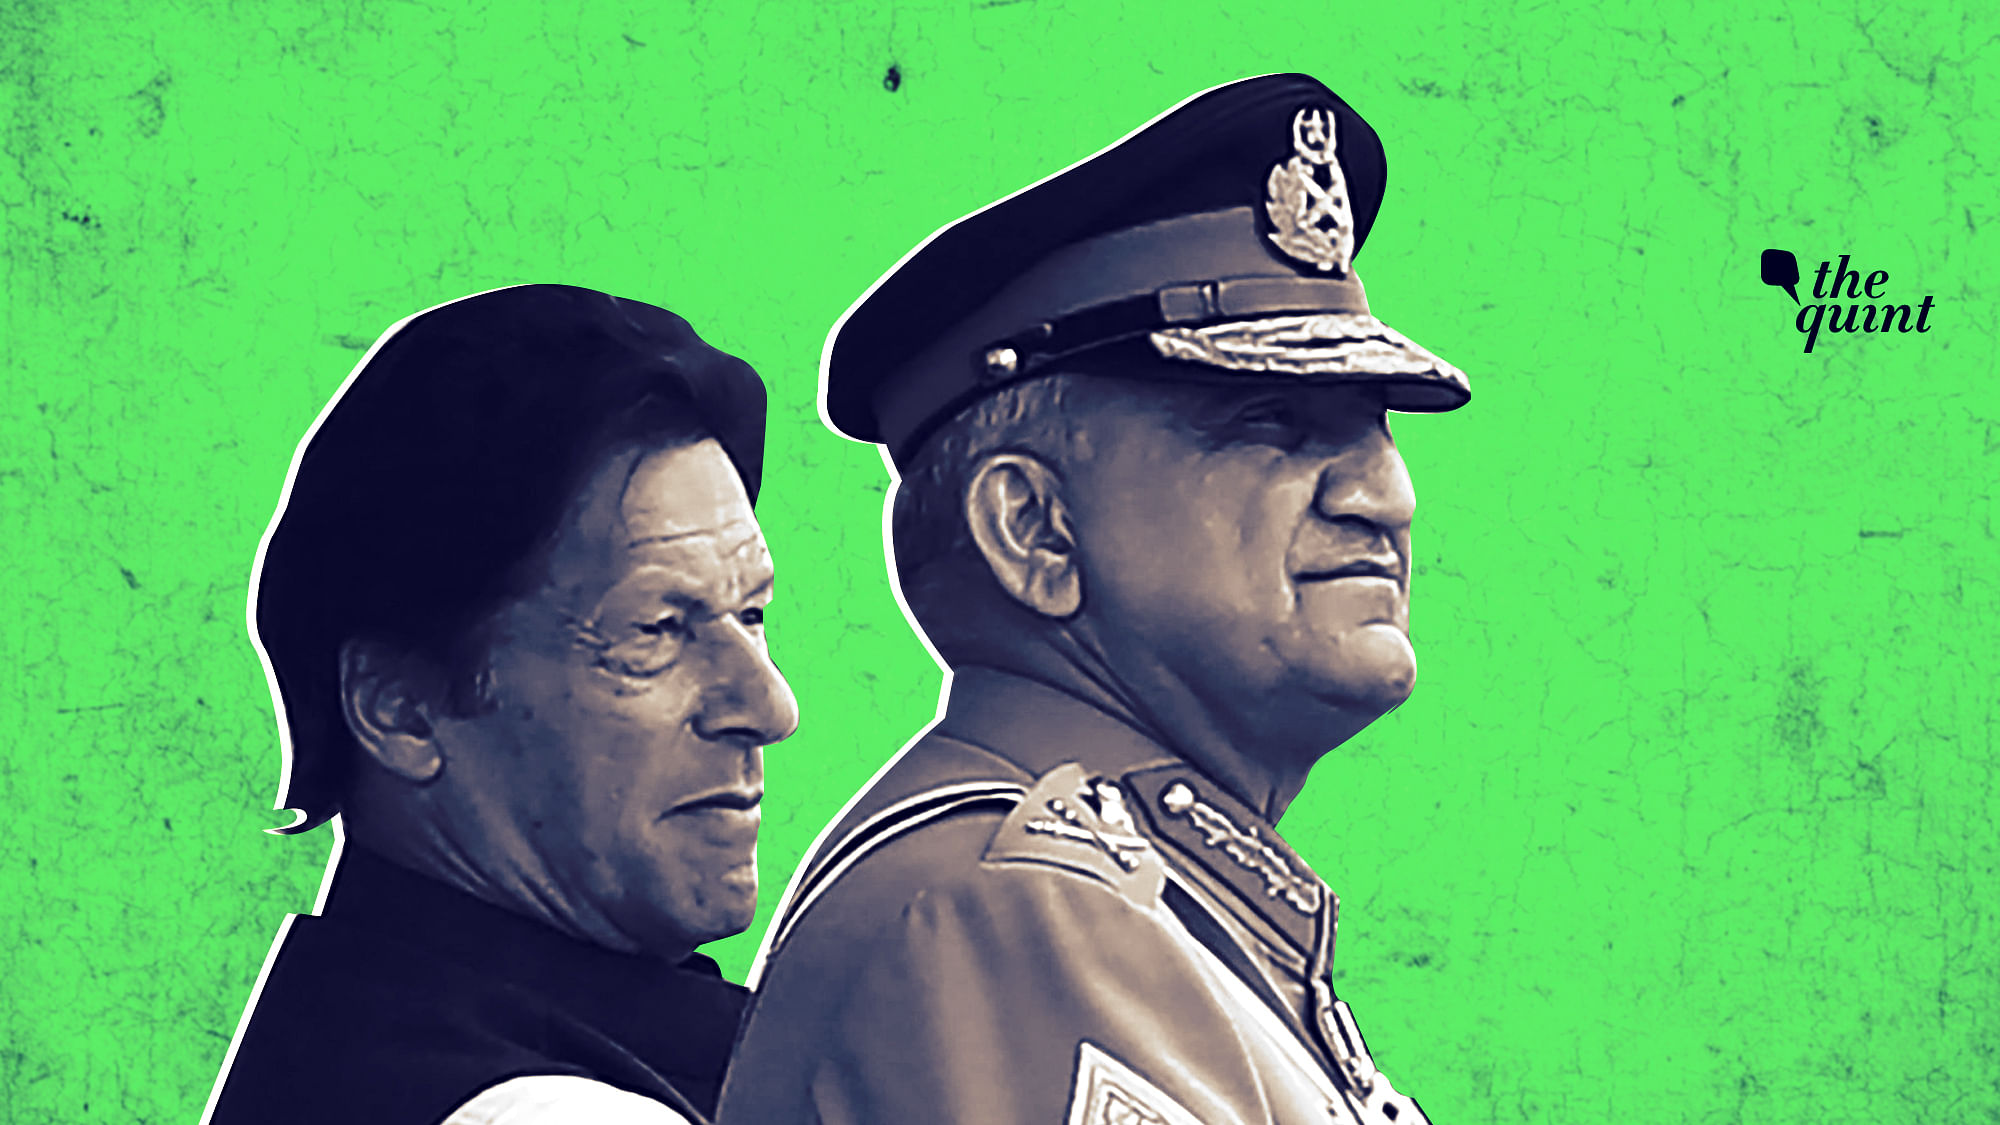 Image of Pakistan PM Imran Khan (L) and Army Chief General Bajwa (R) used for representational purposes.